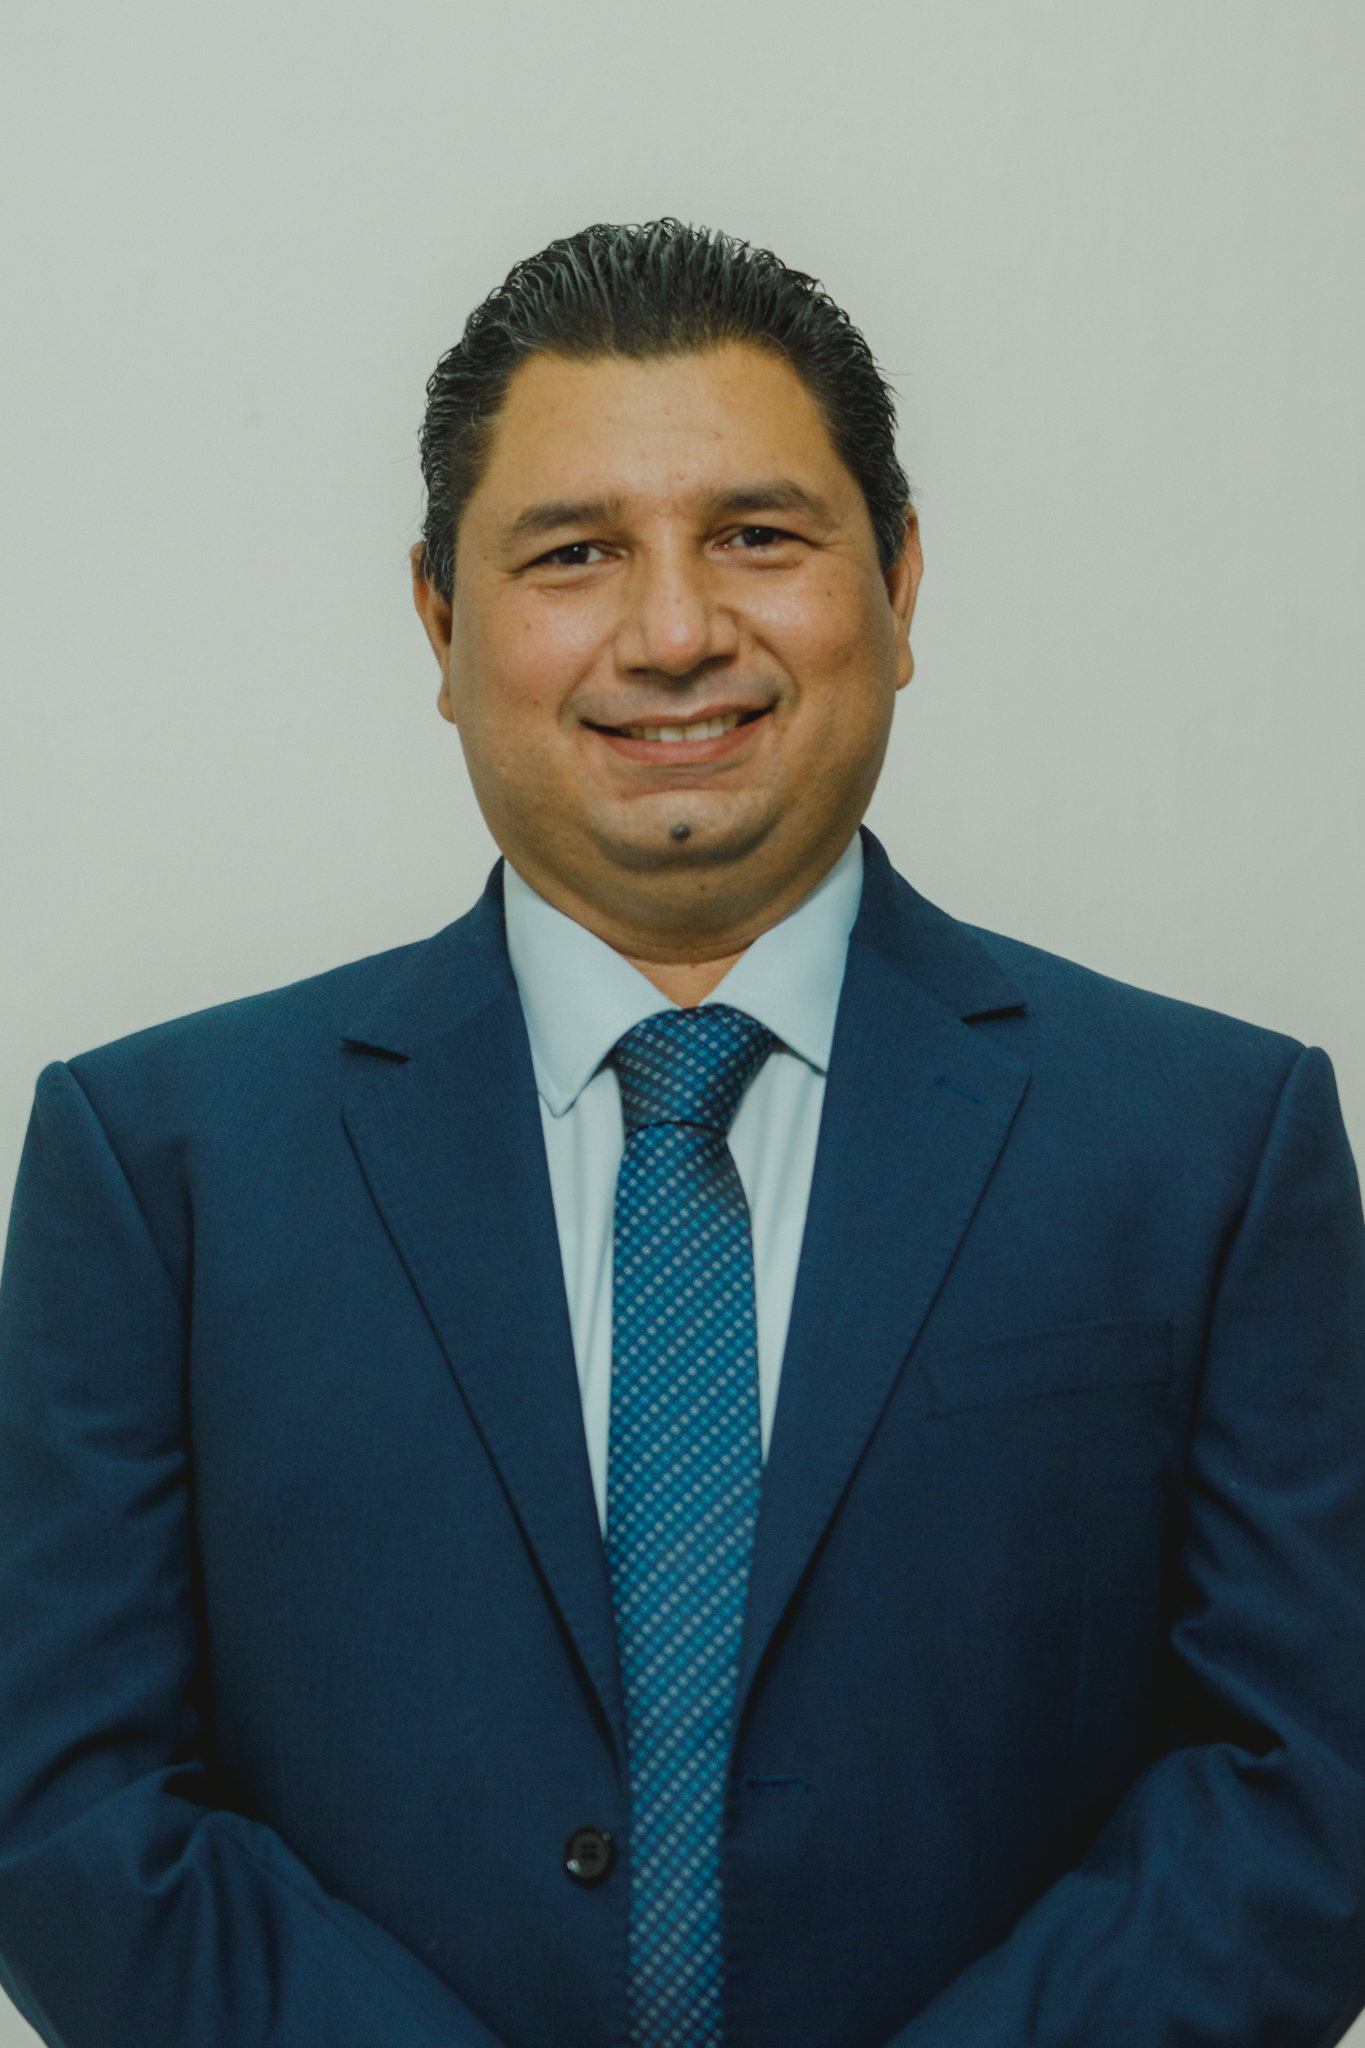 Dr. Pedro Ulises Bautista Rosales